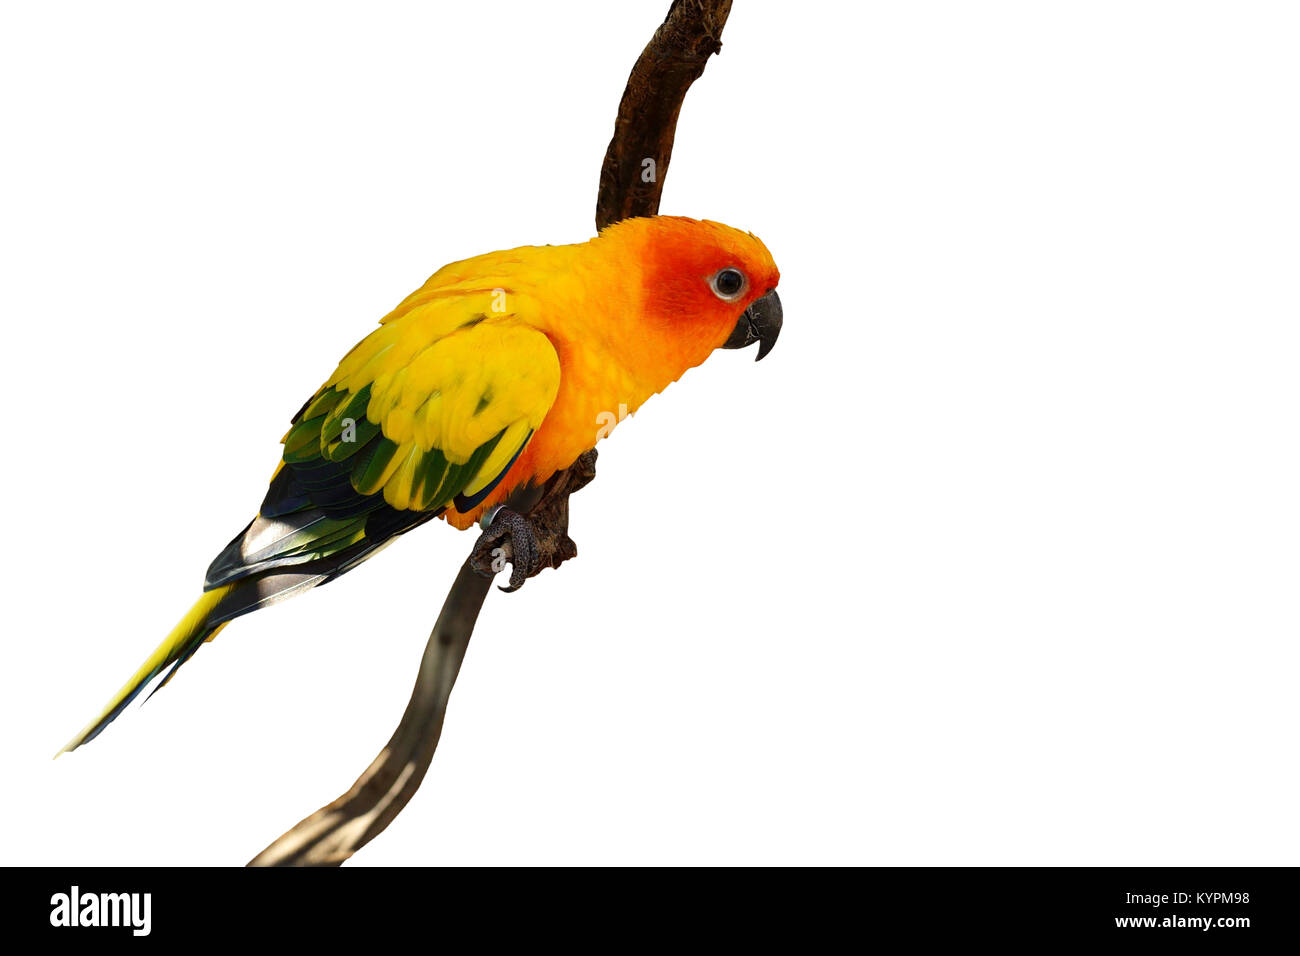 sun conure, beautiful yellow parrot bird isolated on white background Stock Photo